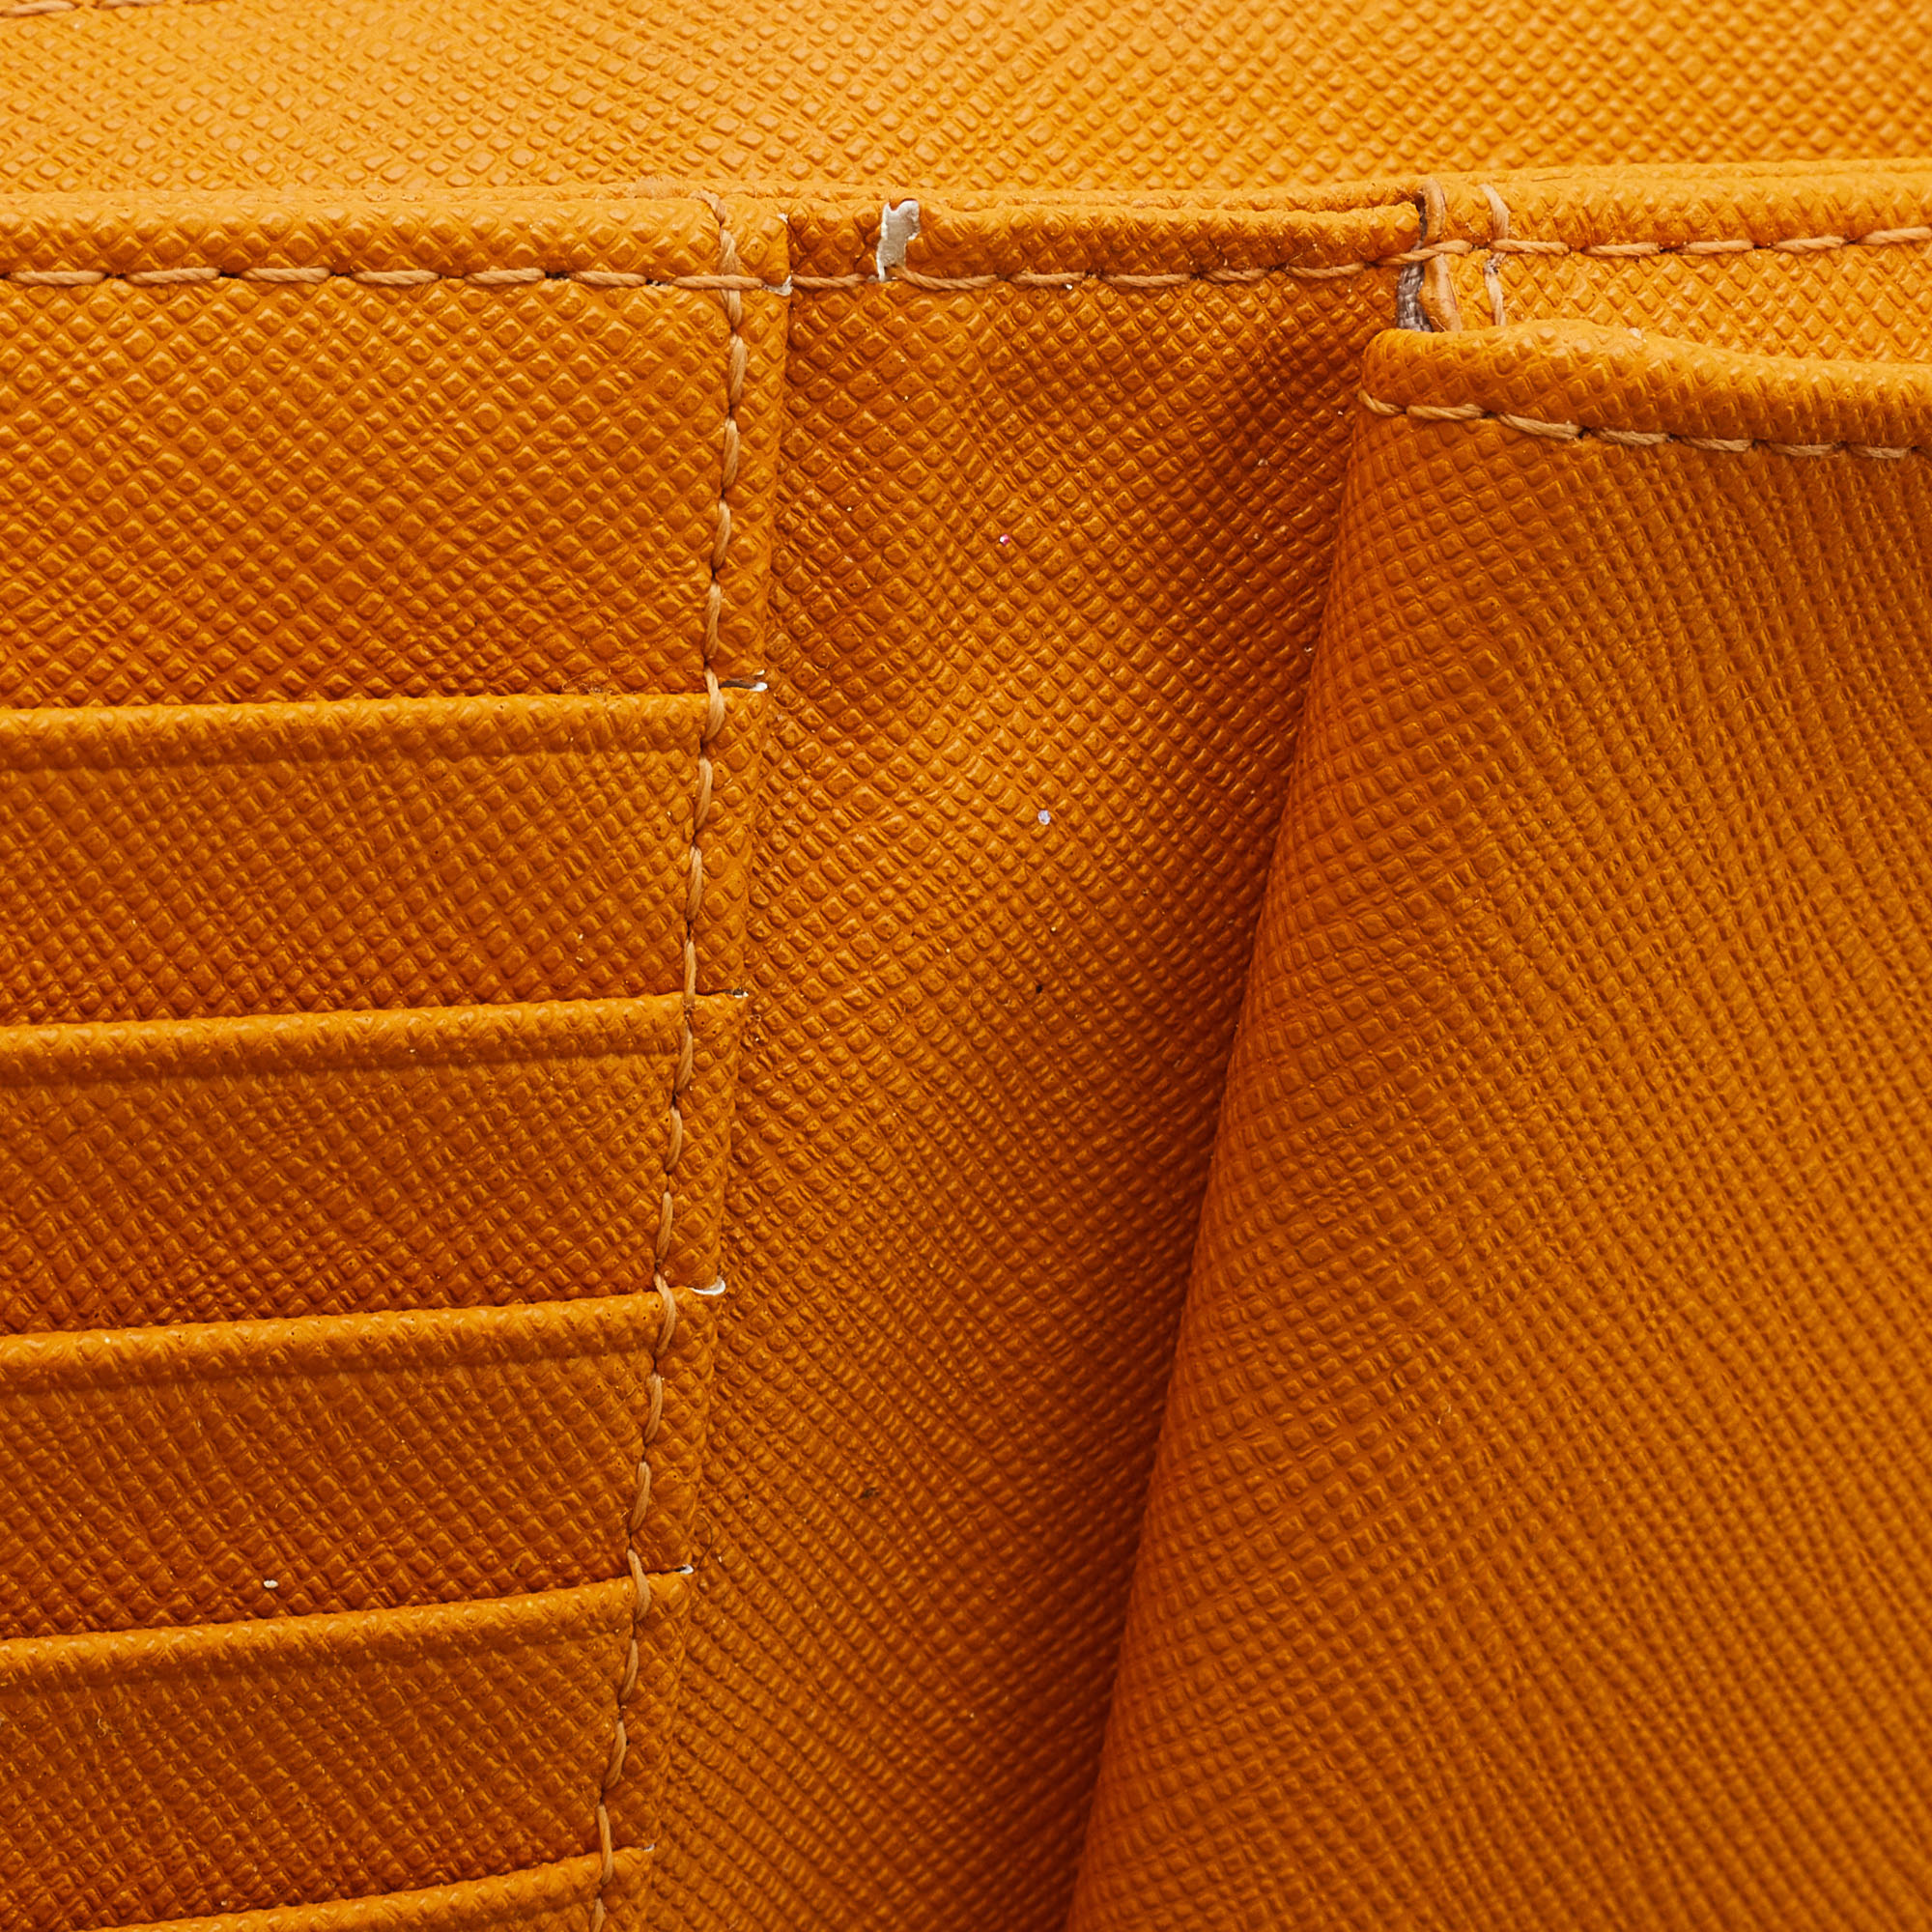 Dkny Mustard Leather Double Zip Crossbody Bag